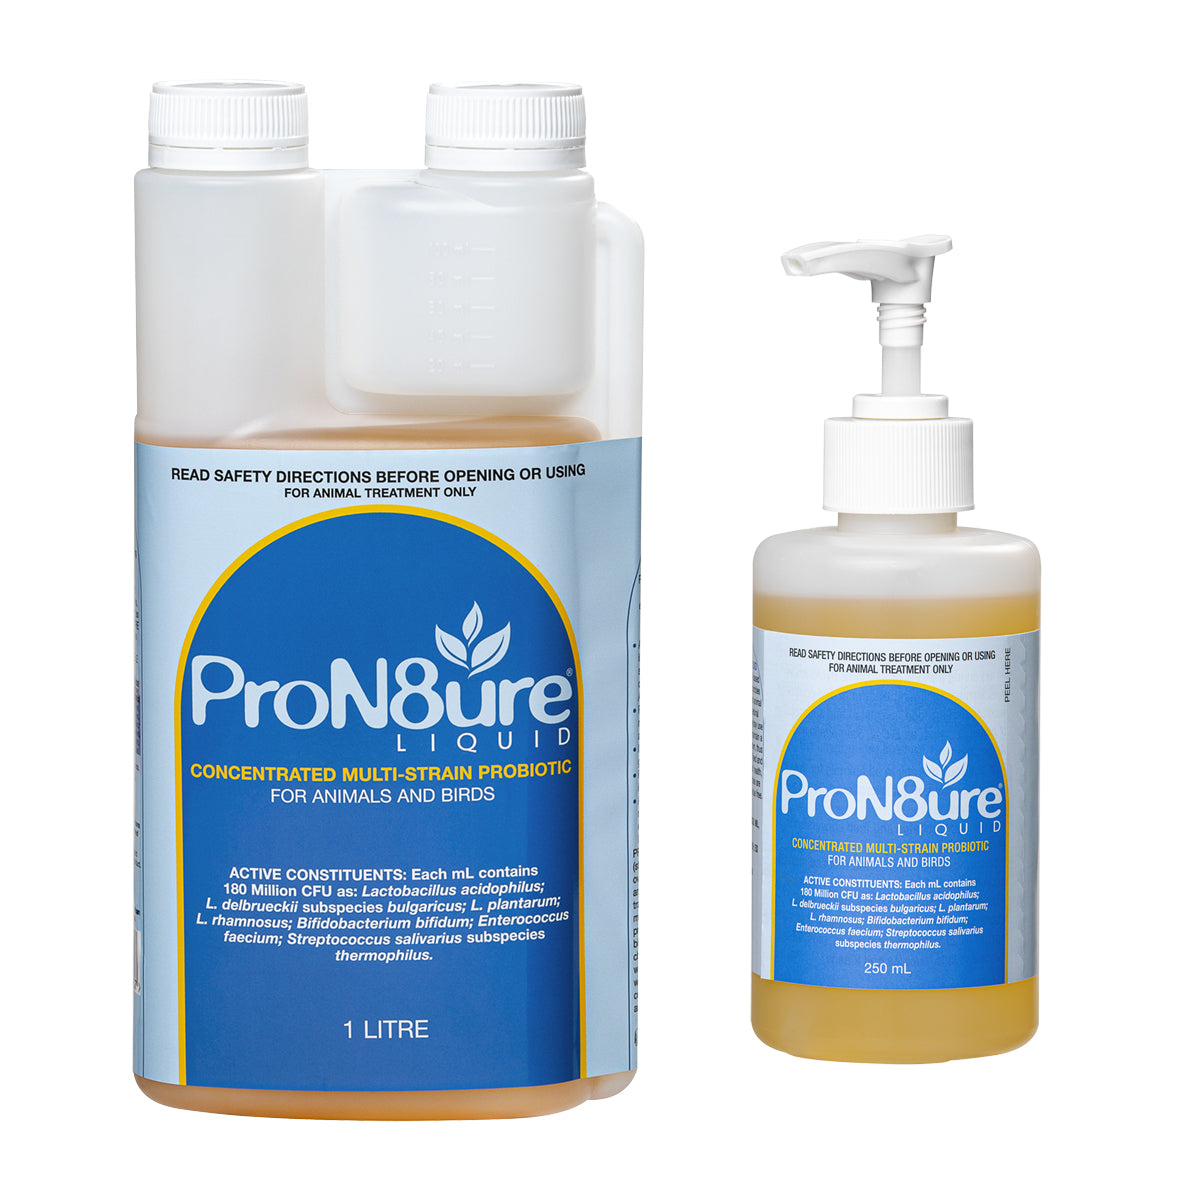 ProN8ure (formerly Protexin) Probiotic Liquid